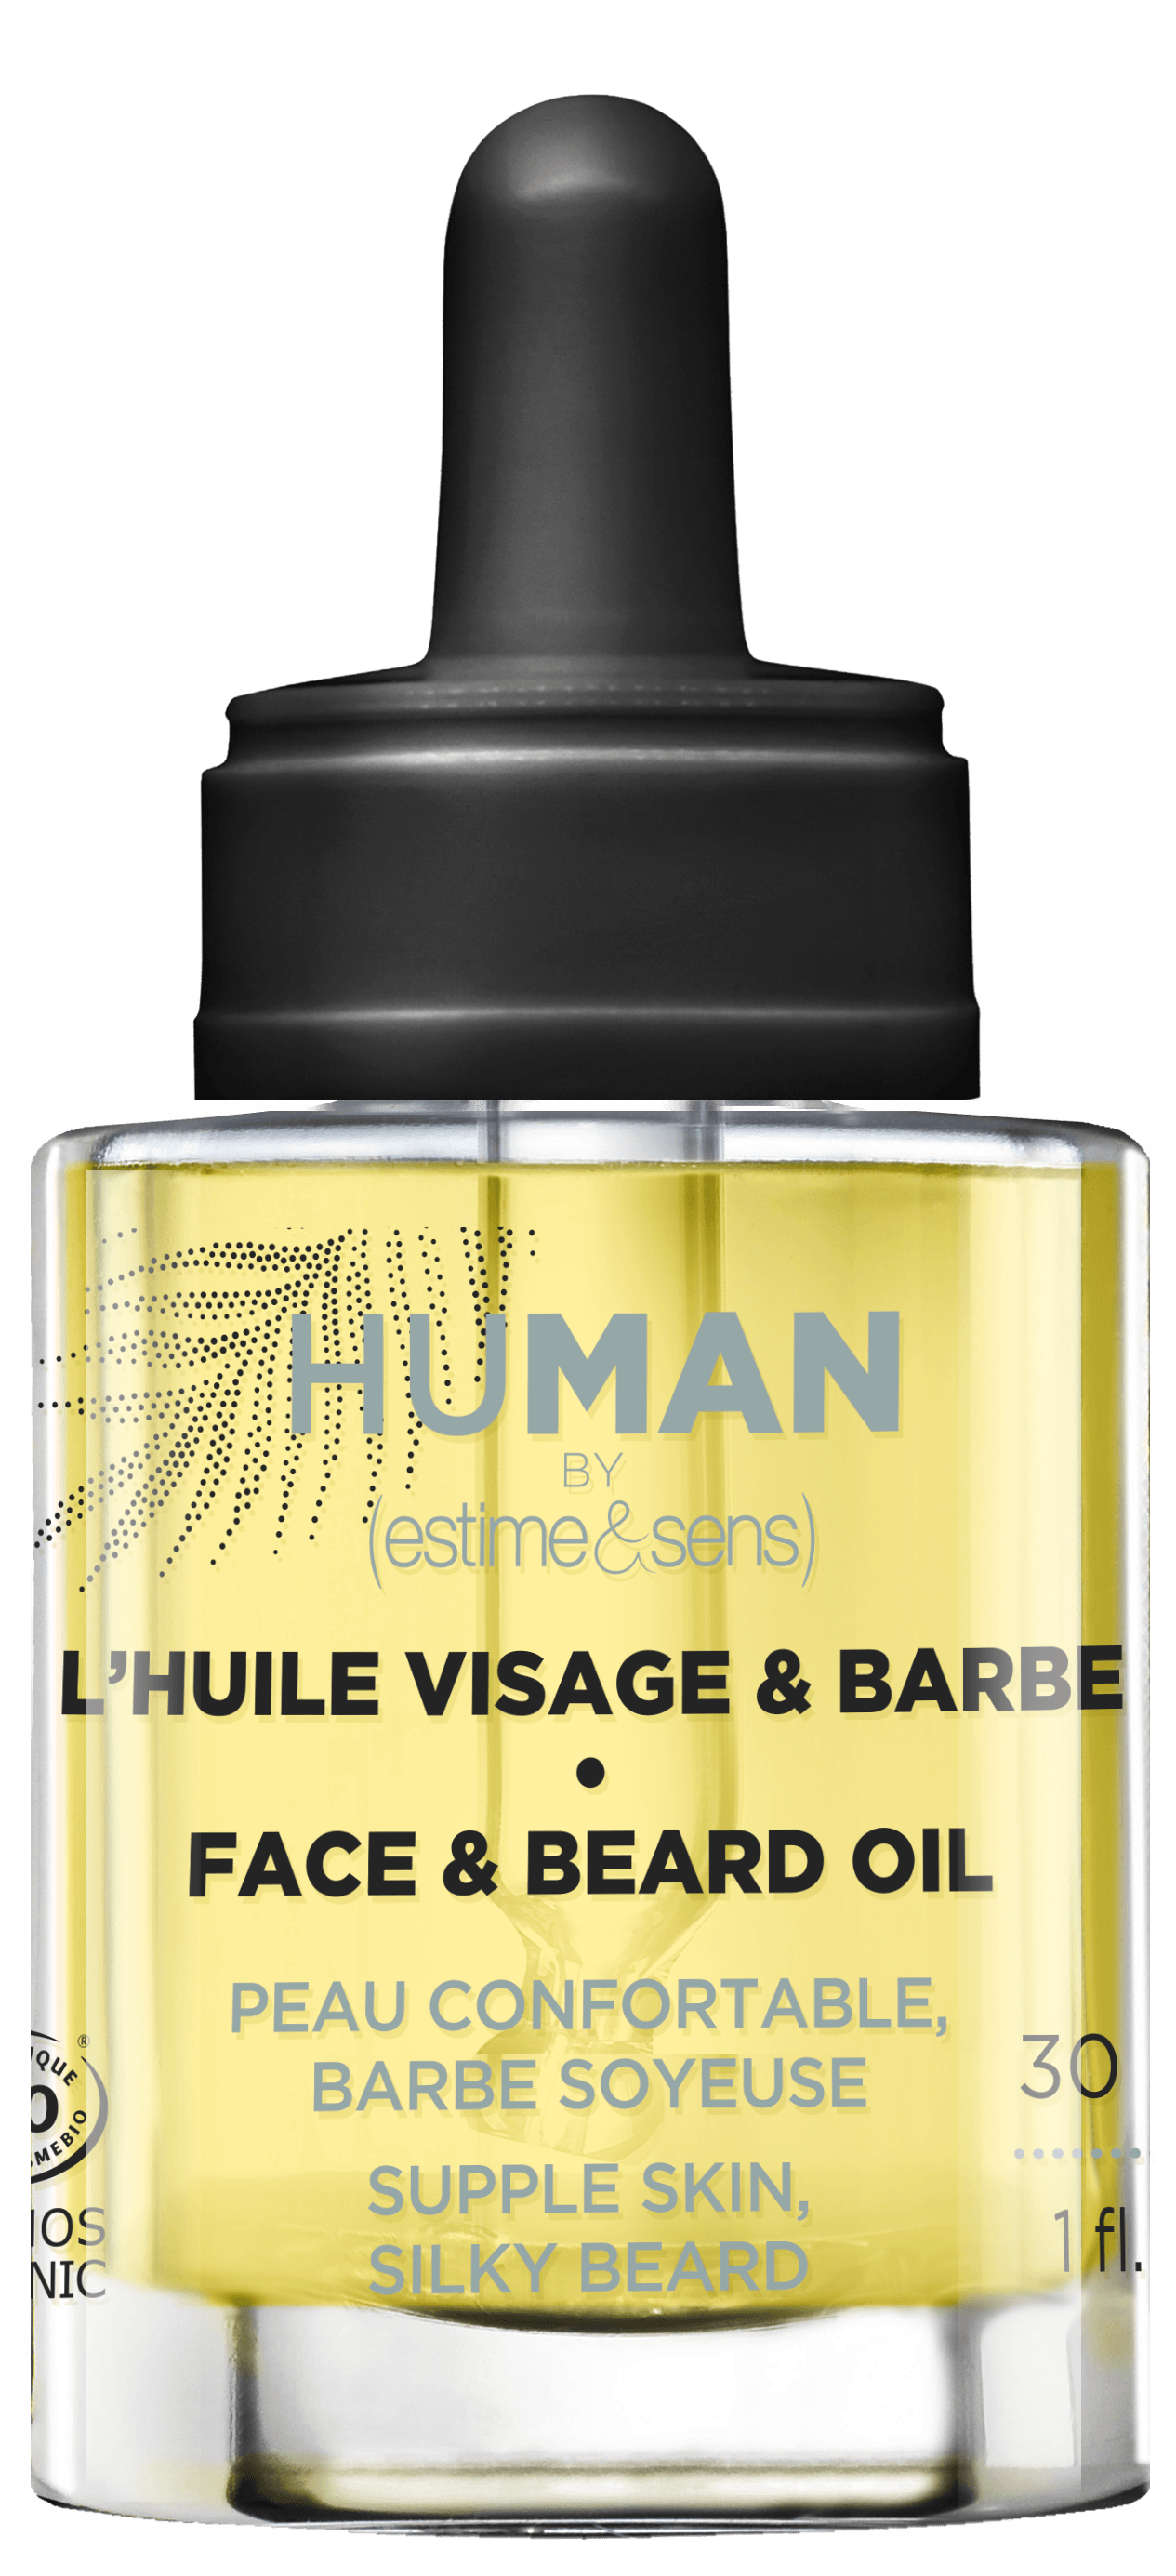 face and beard oil human by estime & sens